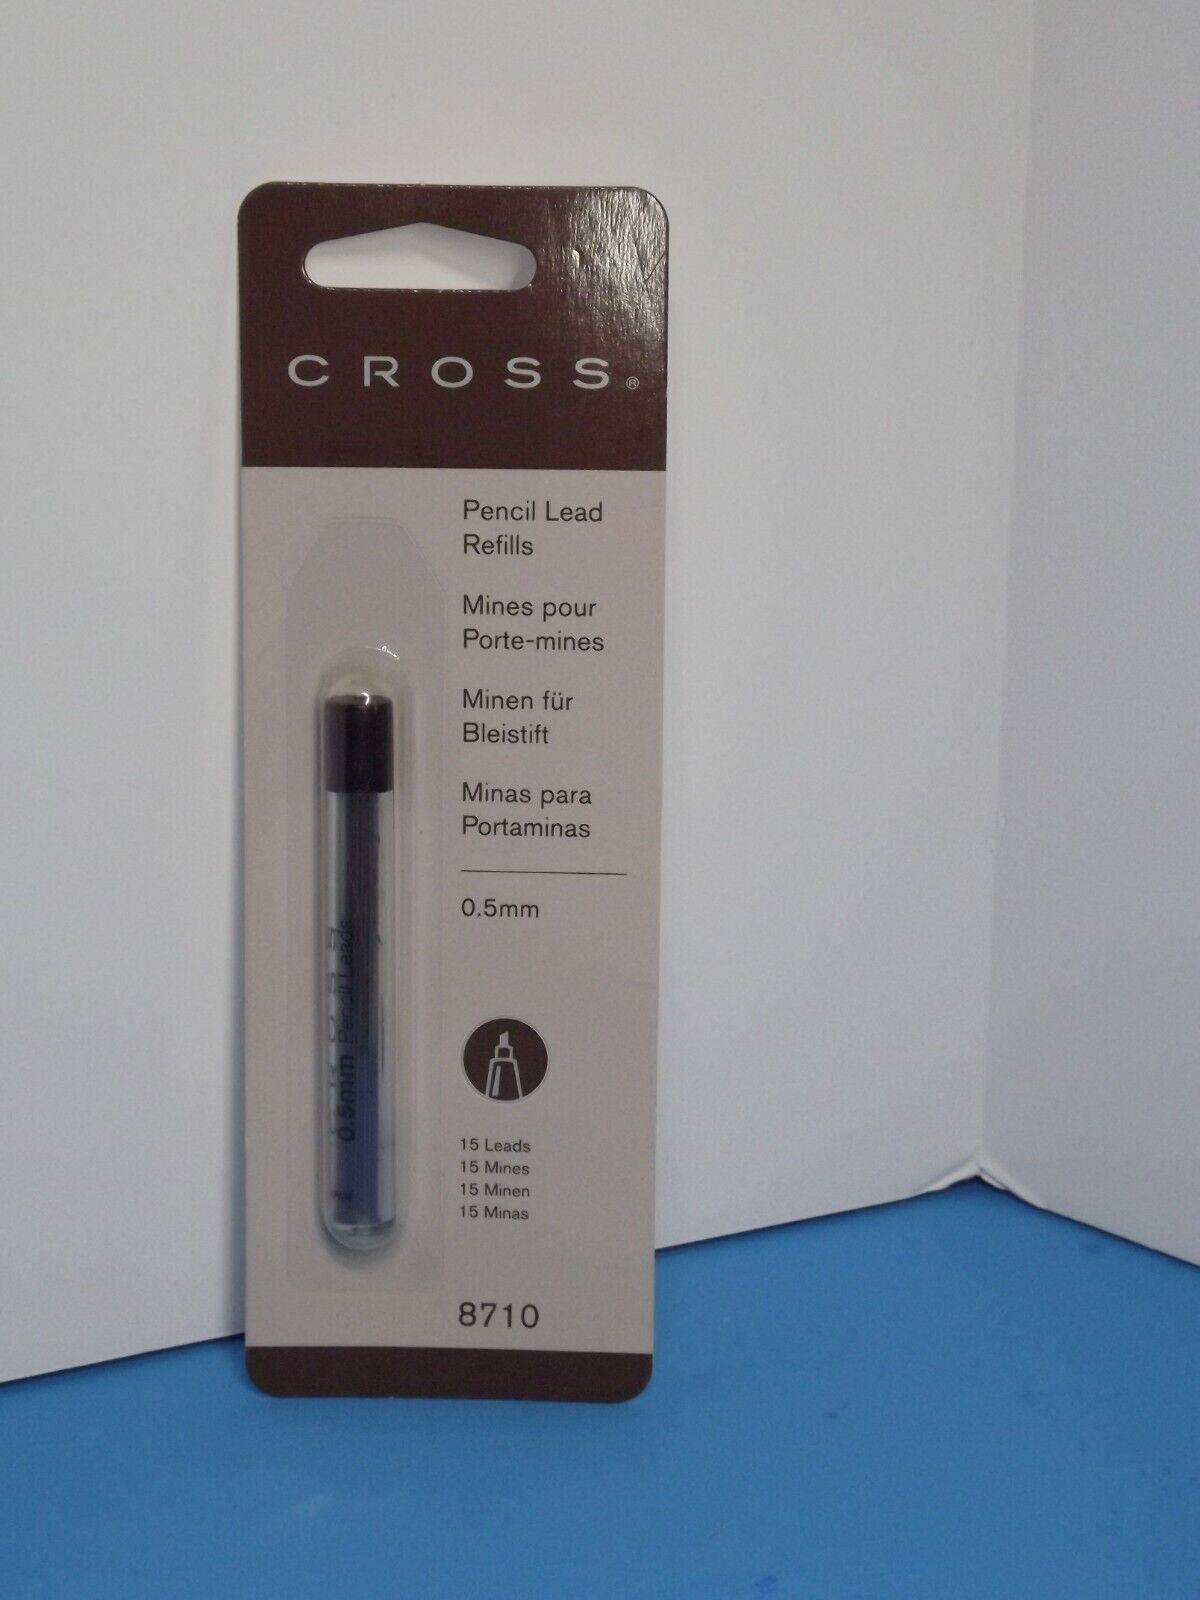 Cross Pencil Lead Refill 0.5mm 8710  15 Leads New (f) - $22.76